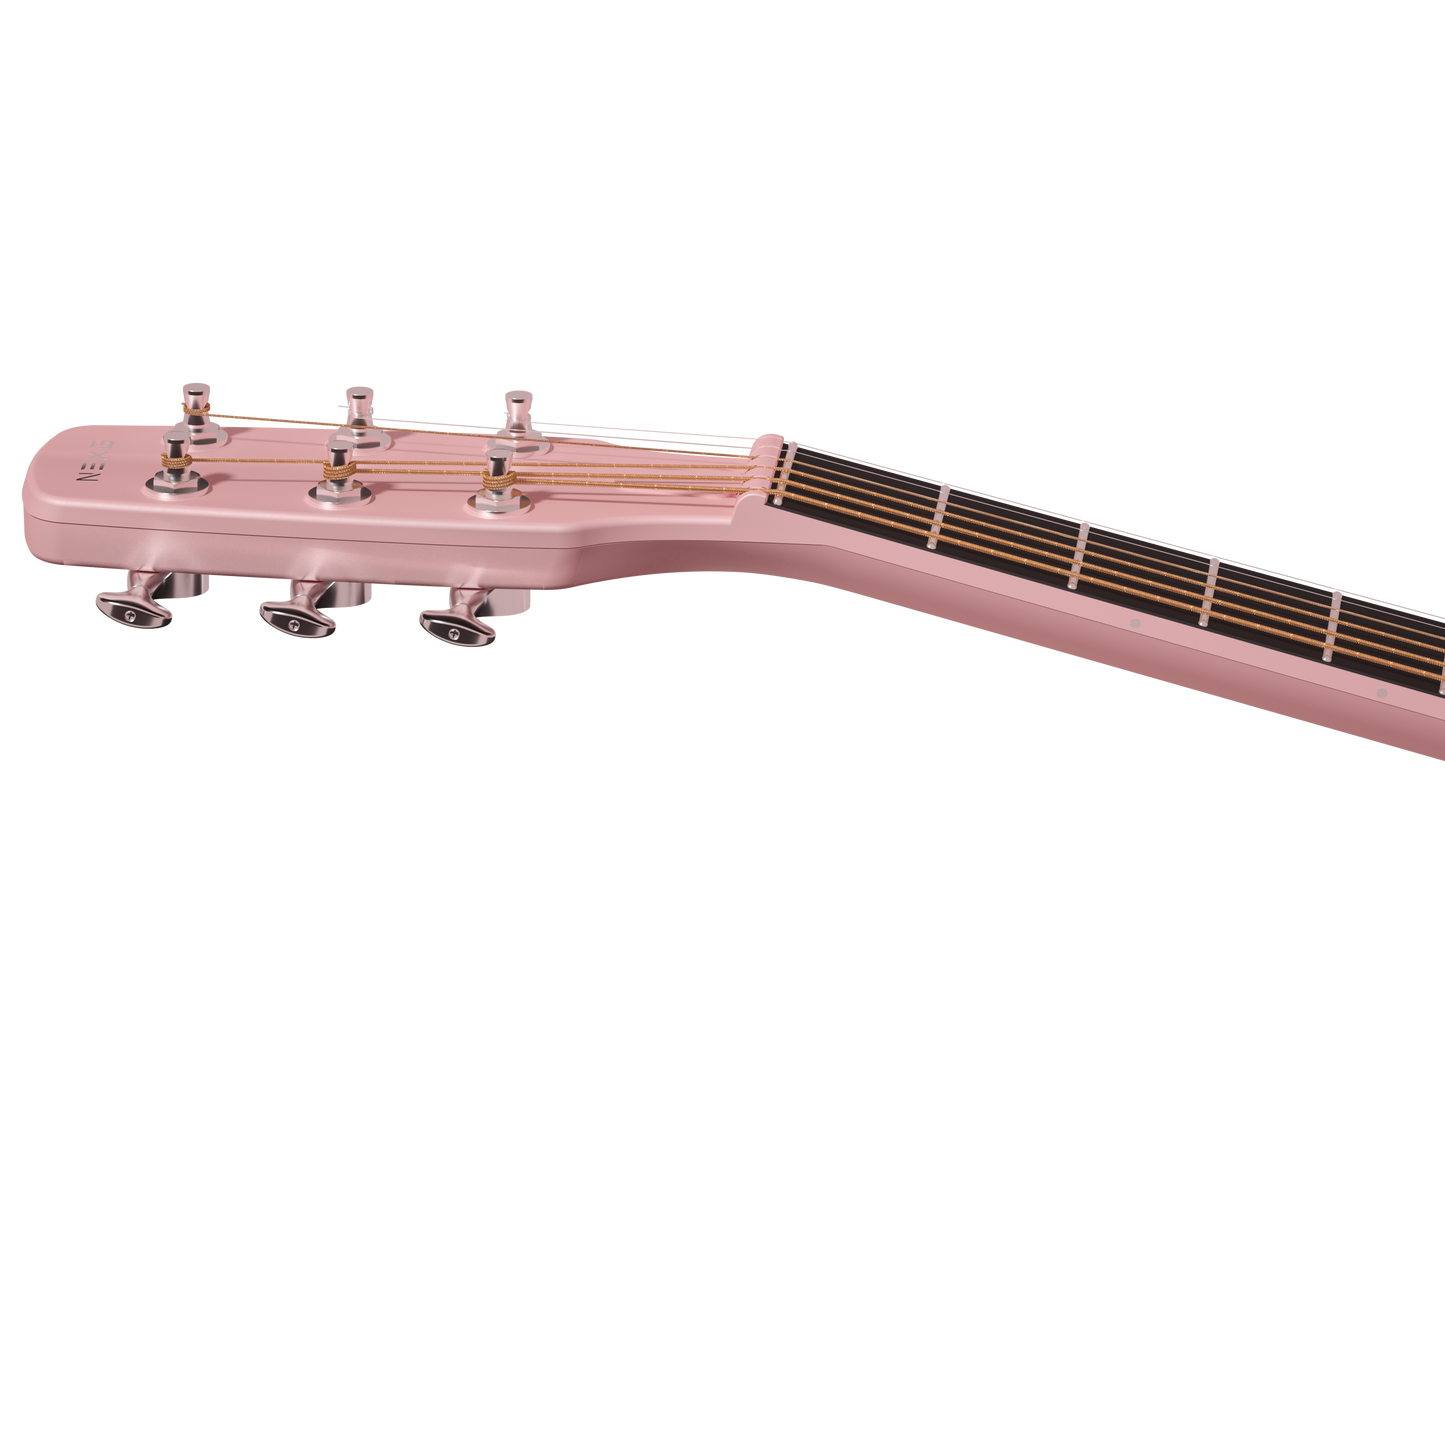 ENYA NEXG SE Carbon Fiber Guitar Pink